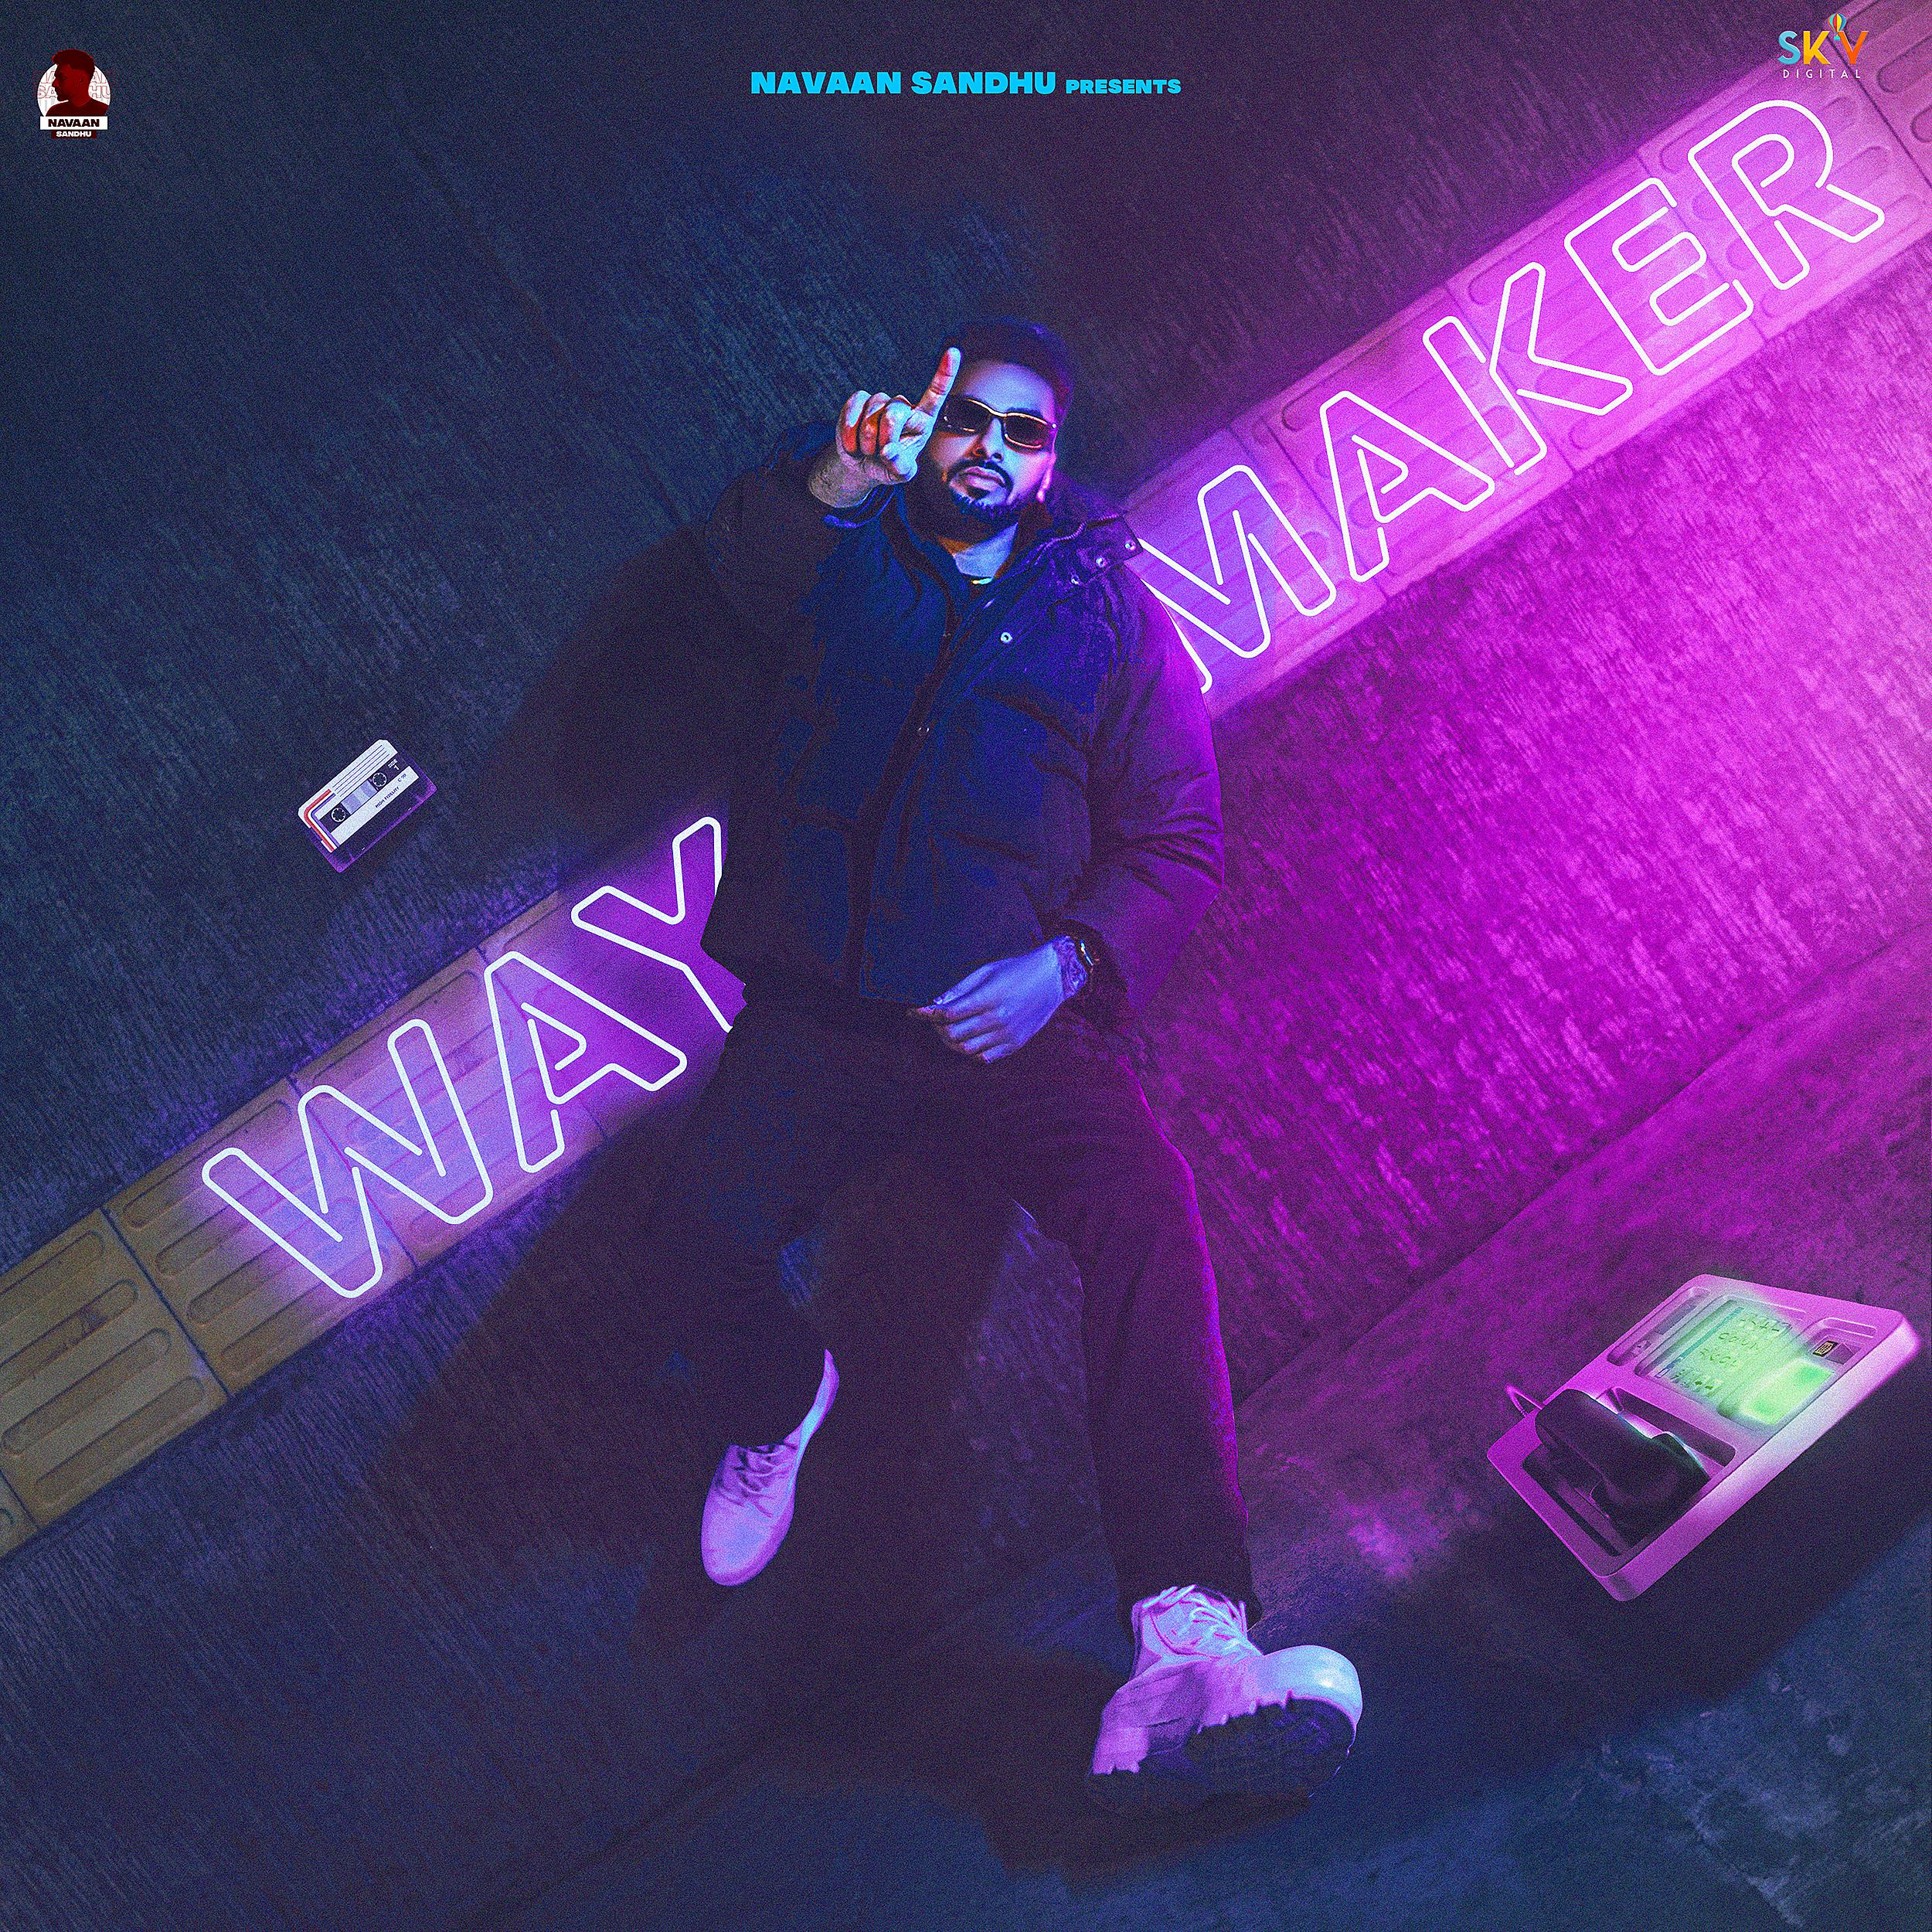 Постер альбома Way Maker